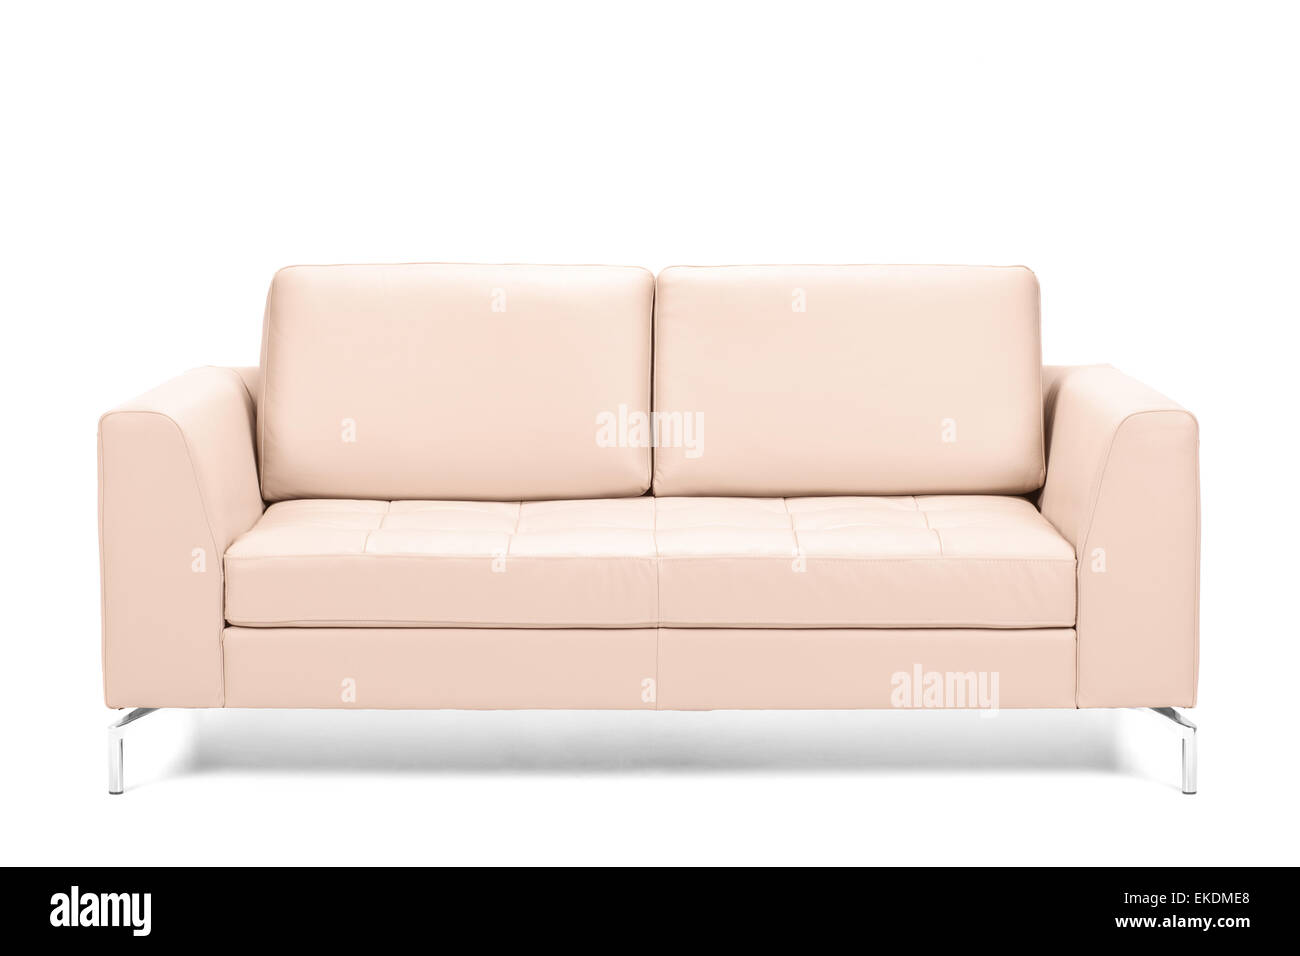 modern leather sofa isolated on white background Stock Photo